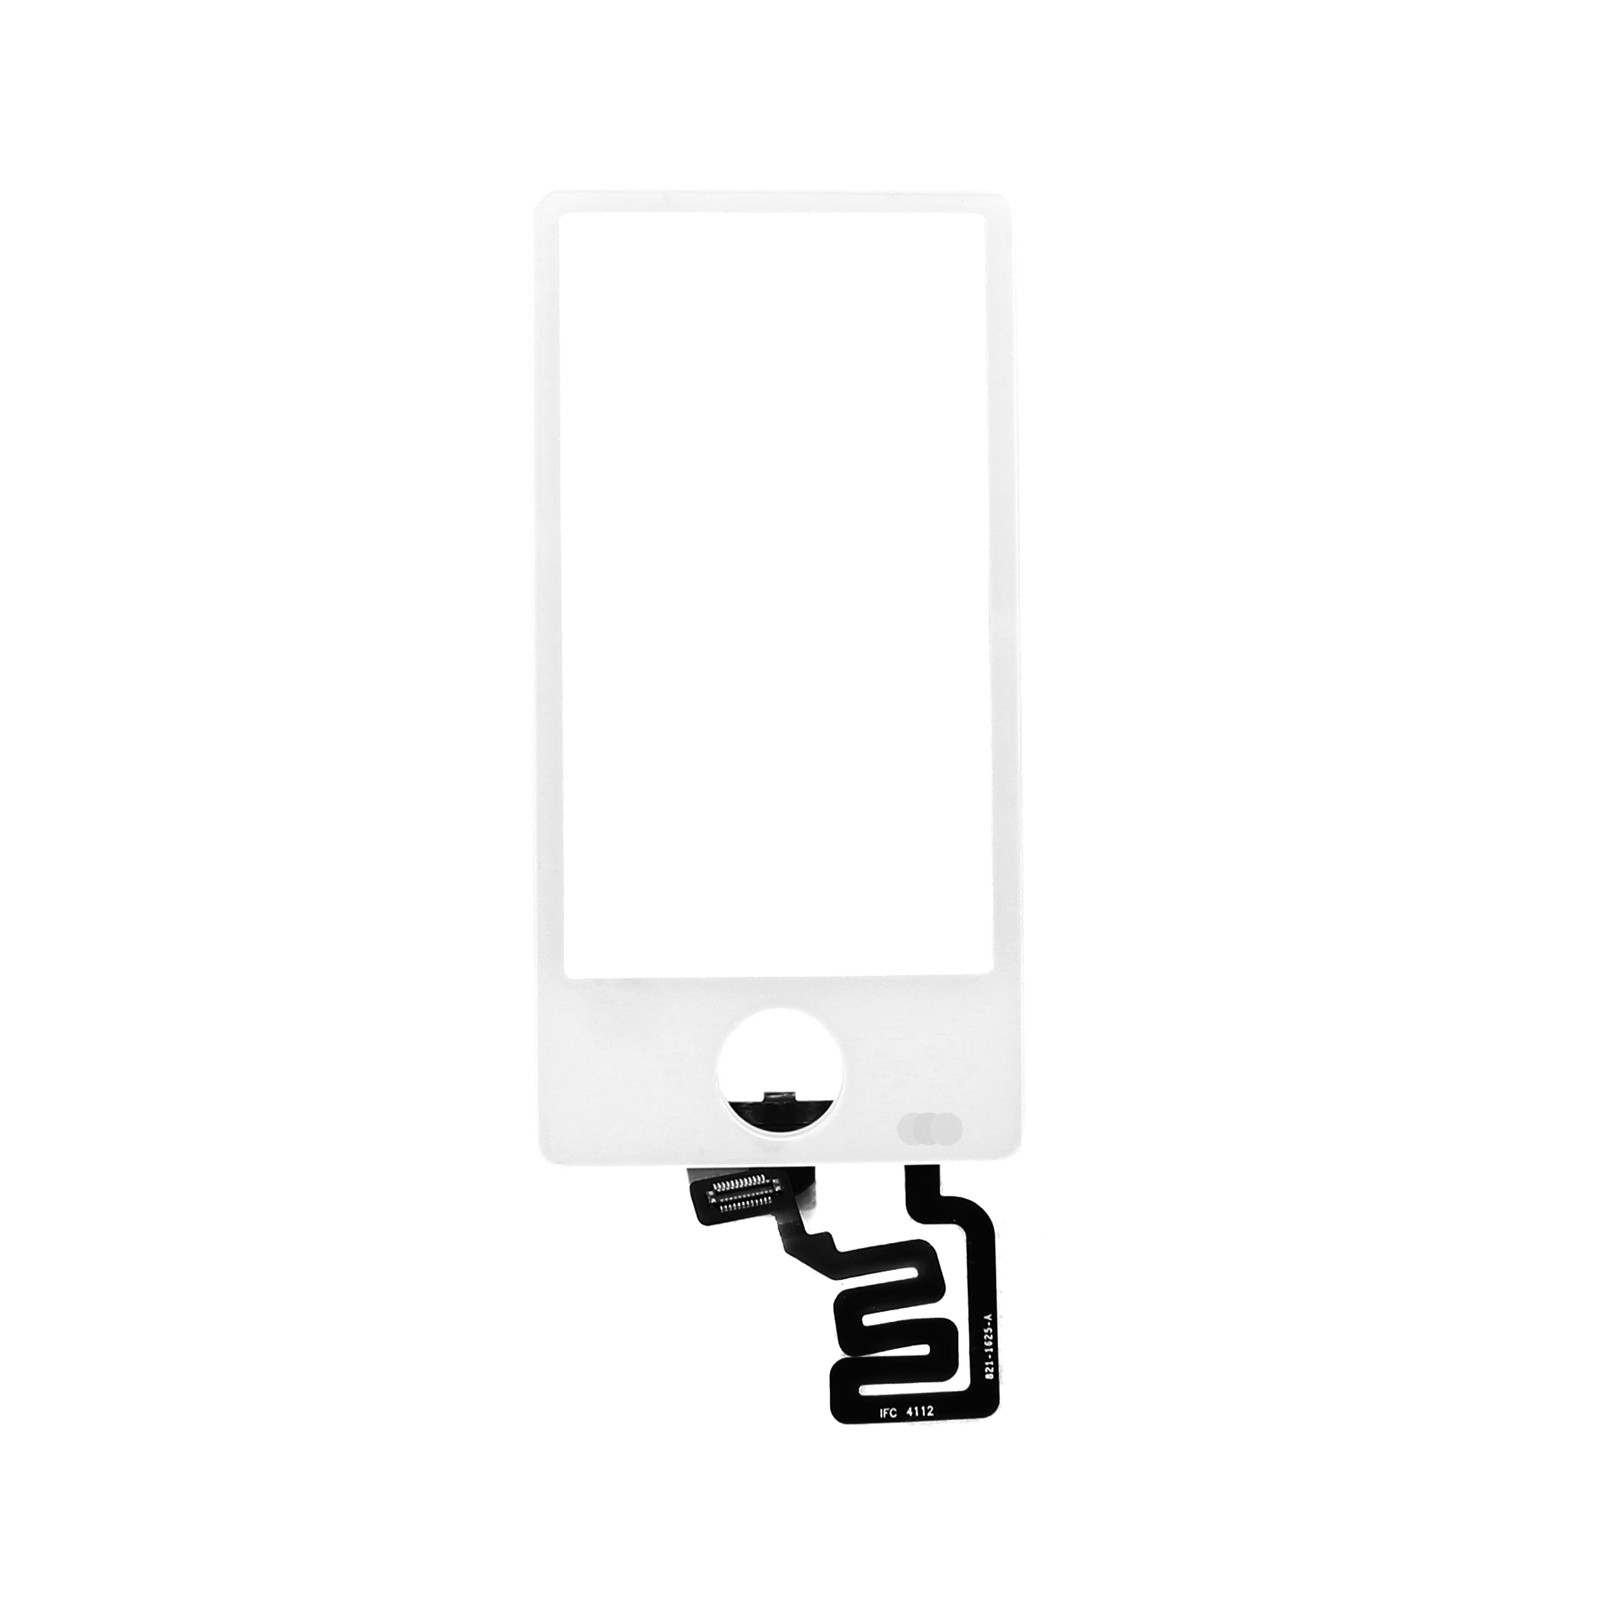 Touchscreen Glas passend für Apple iPod nano 7 / 7G / 7. Generation / A1446, Siebte Generation, MD481LL/A - weiß